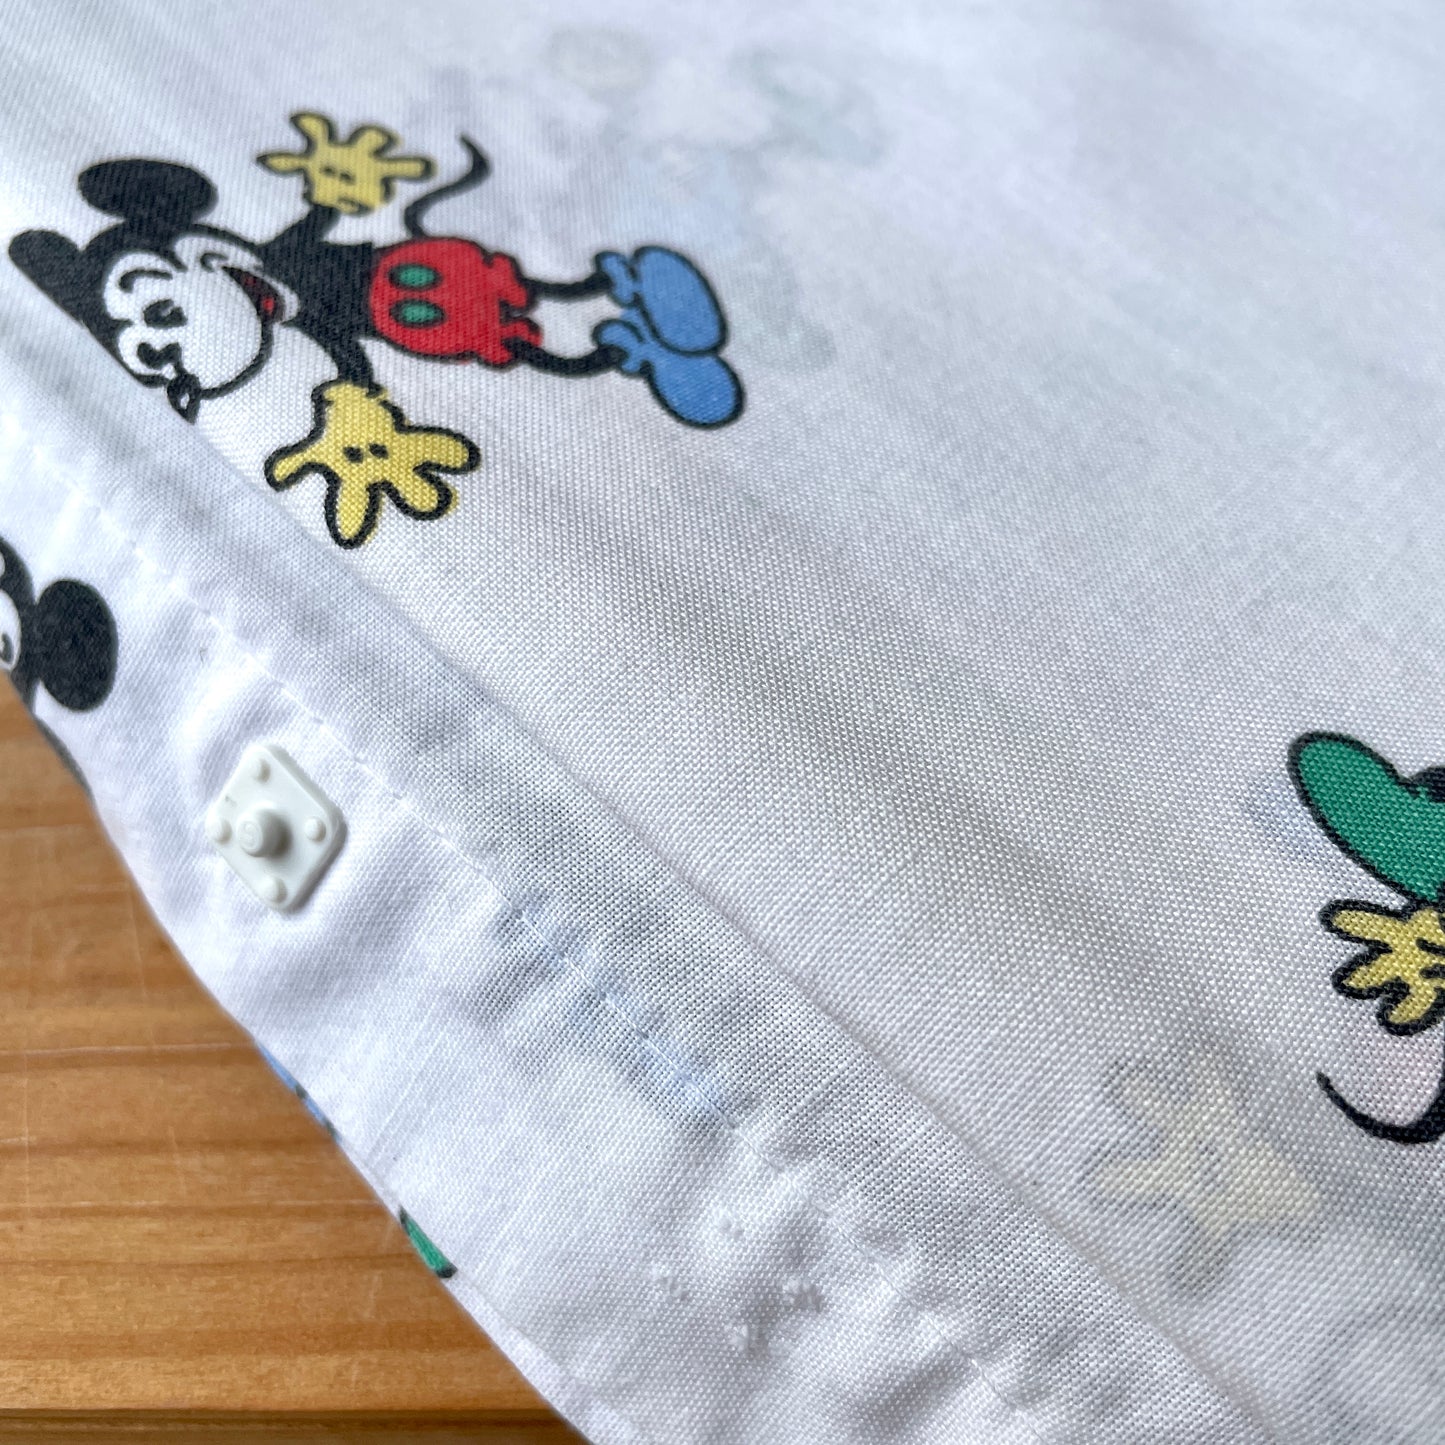 Vintage Mickey Mouse Single Duvet Set